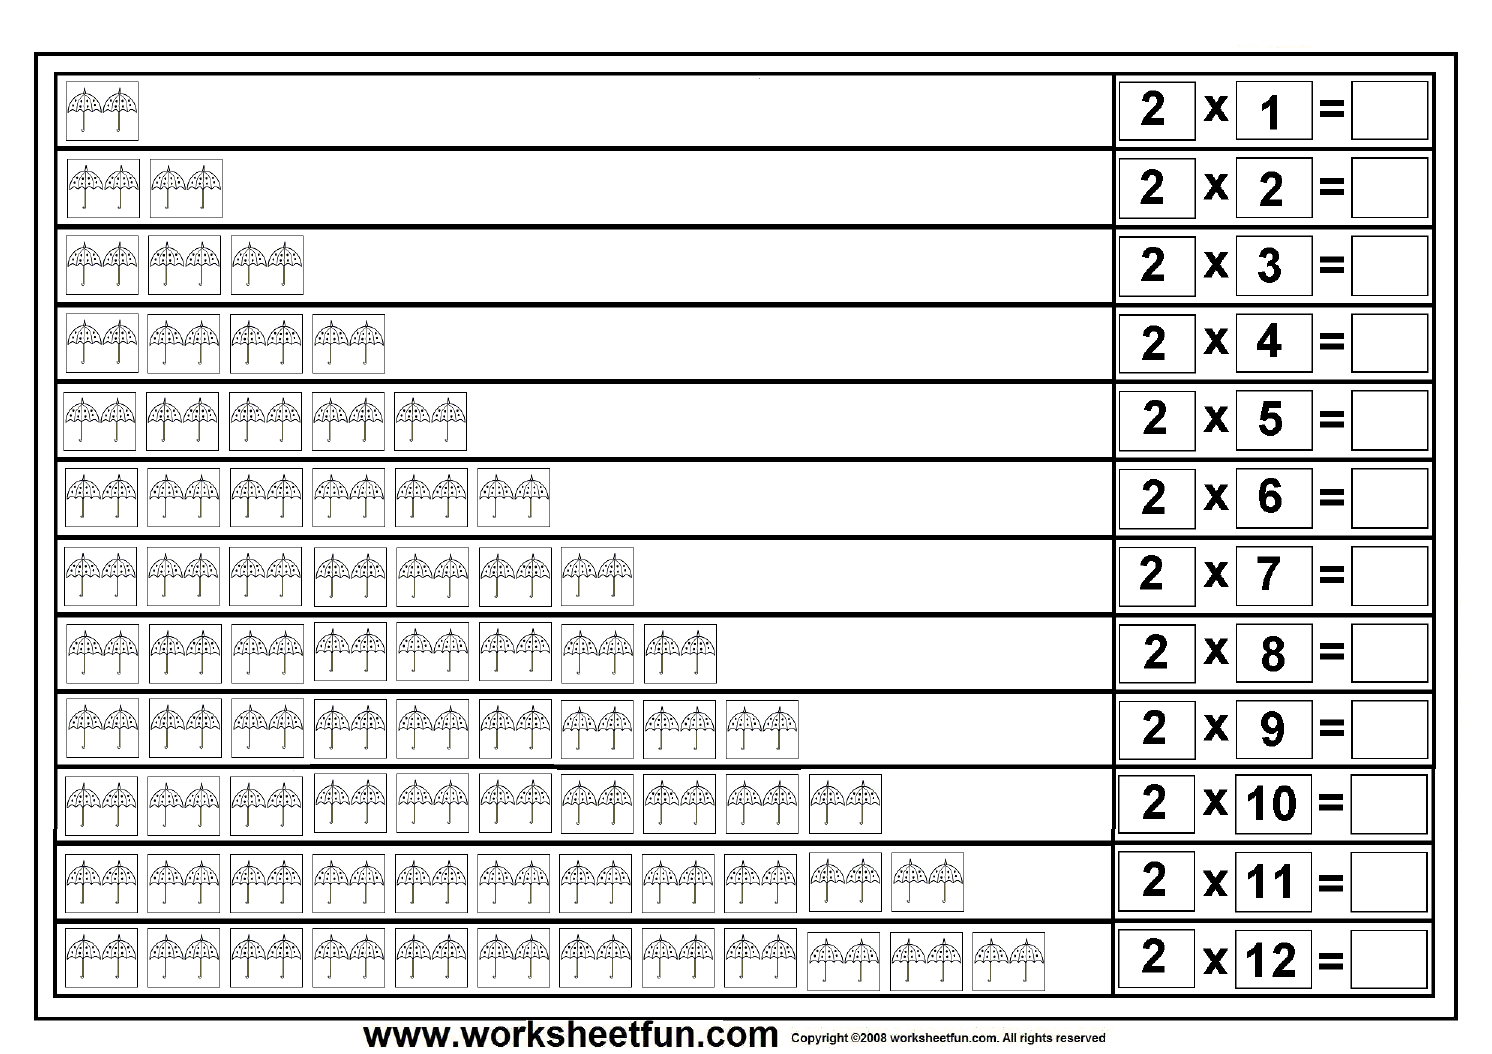 Multiplication Beginner Times Table 2 3 4 FREE Printable Worksheets Multiplication Worksheets Multiplication Mathematics Worksheets